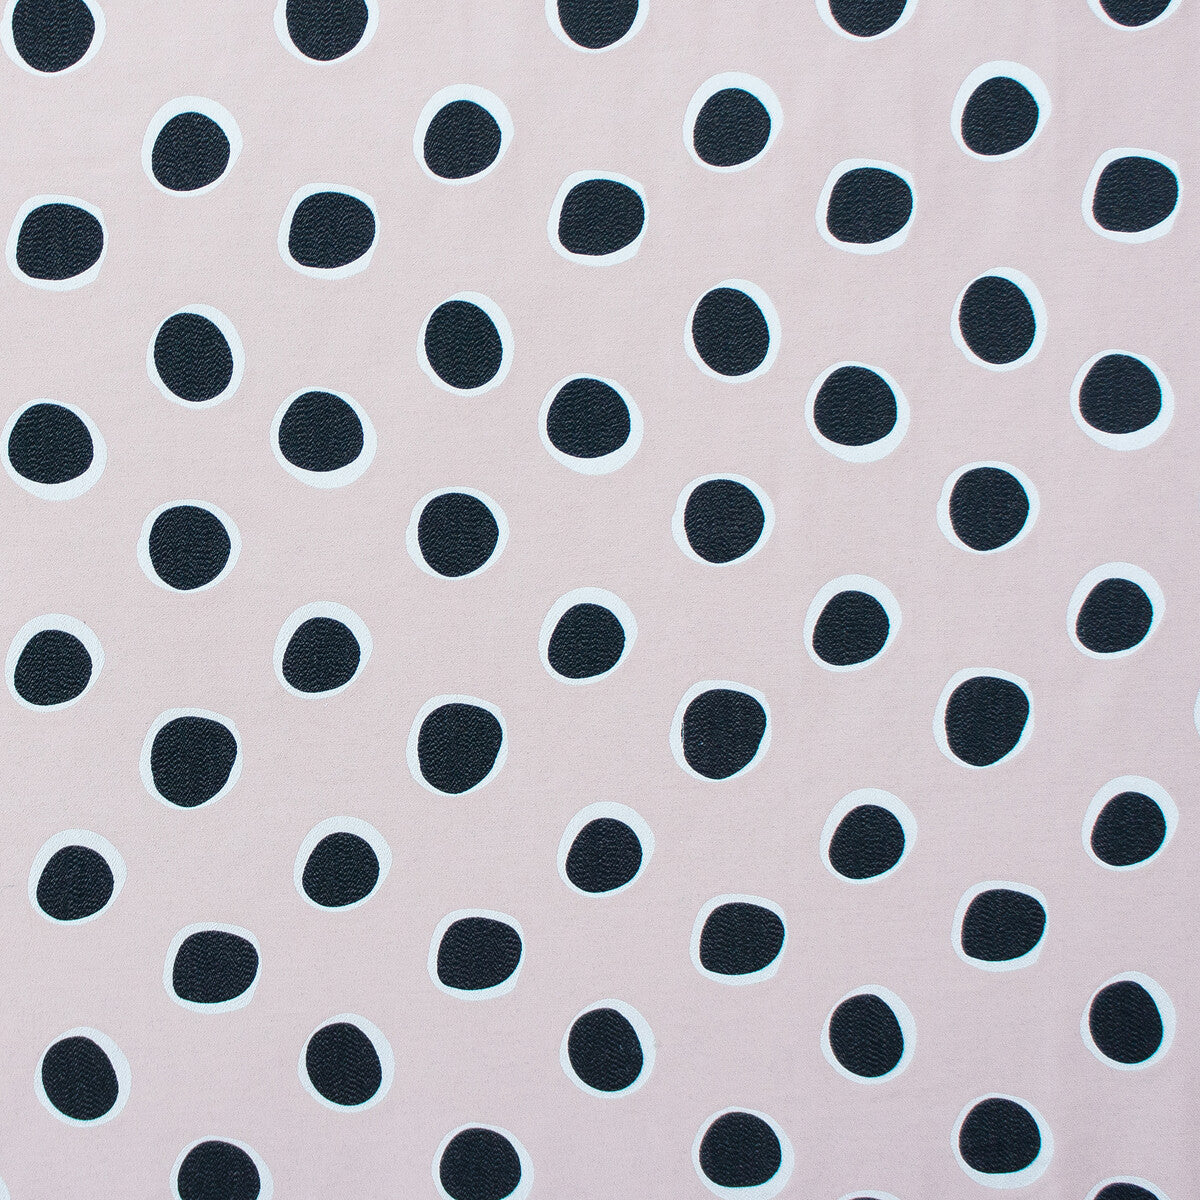 Solis fabric in fondo rosa color - pattern GDT5587.004.0 - by Gaston y Daniela in the Gaston Nuevo Mundo collection